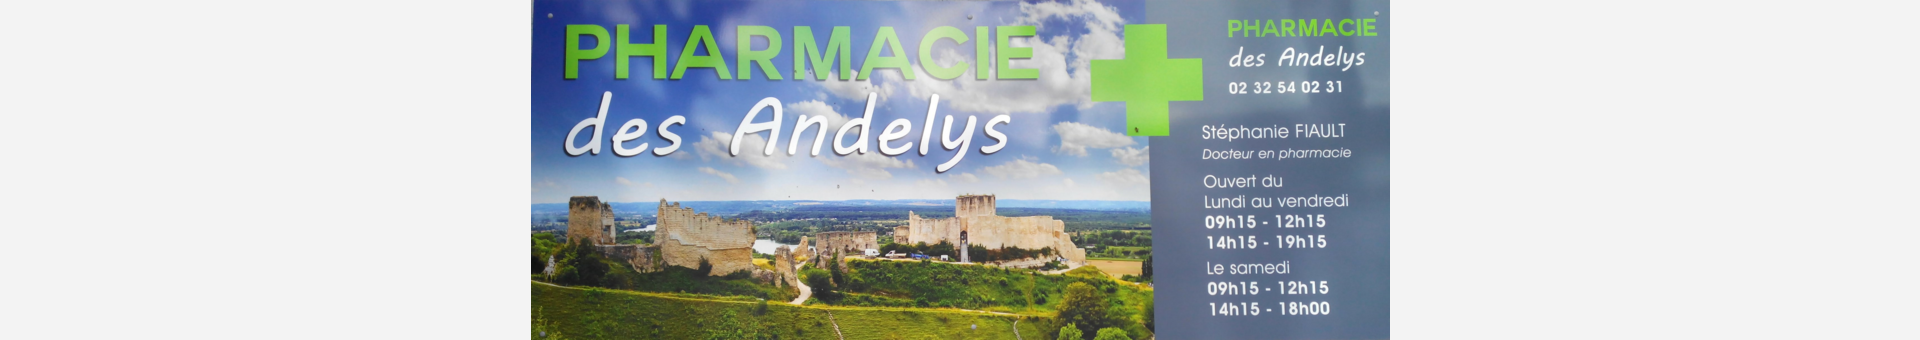 Pharmacie des Andelys,LES ANDELYS